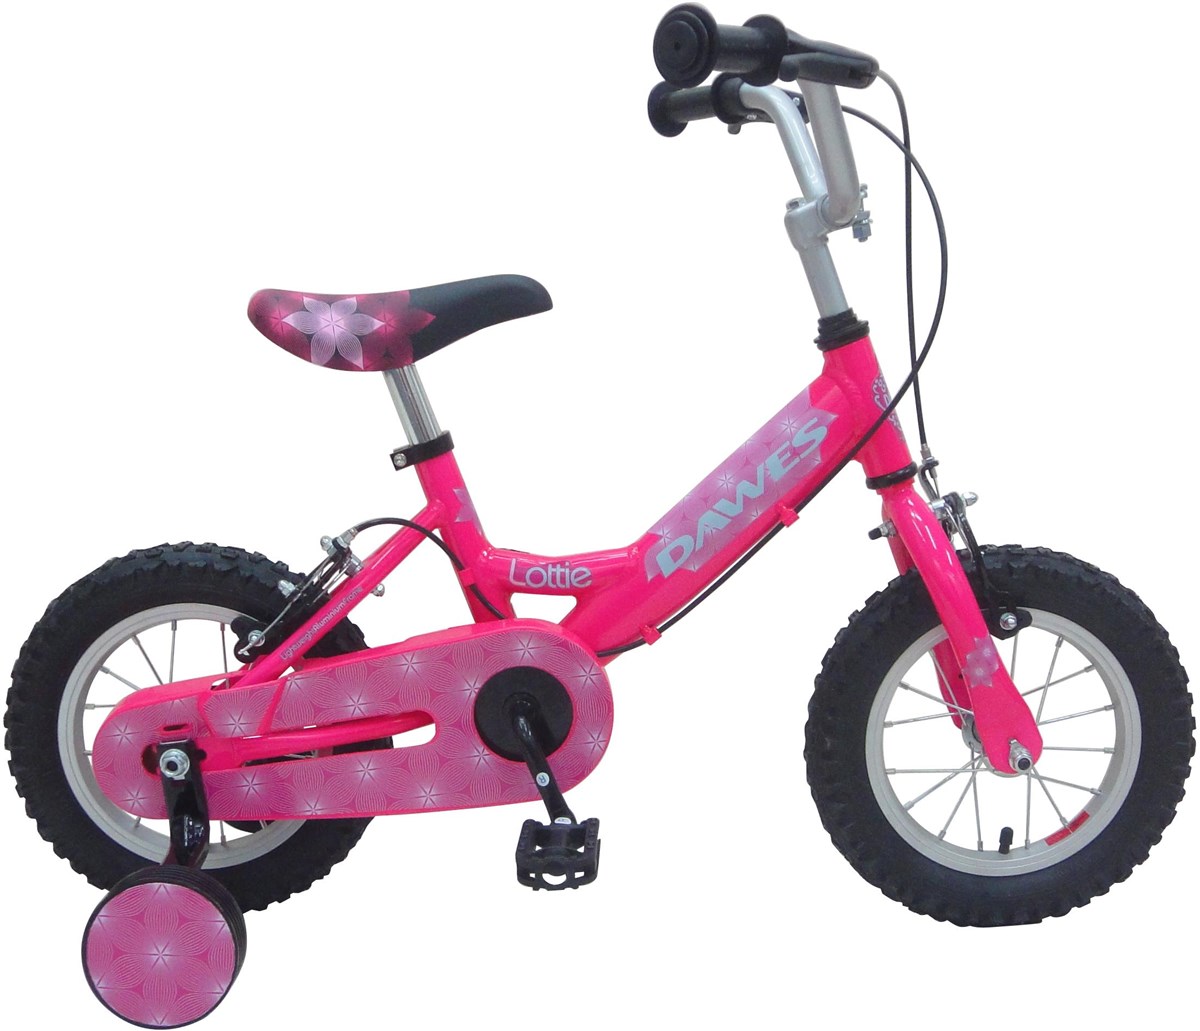 Dawes Lottie 12w Girls 2017 - Kids Bike product image